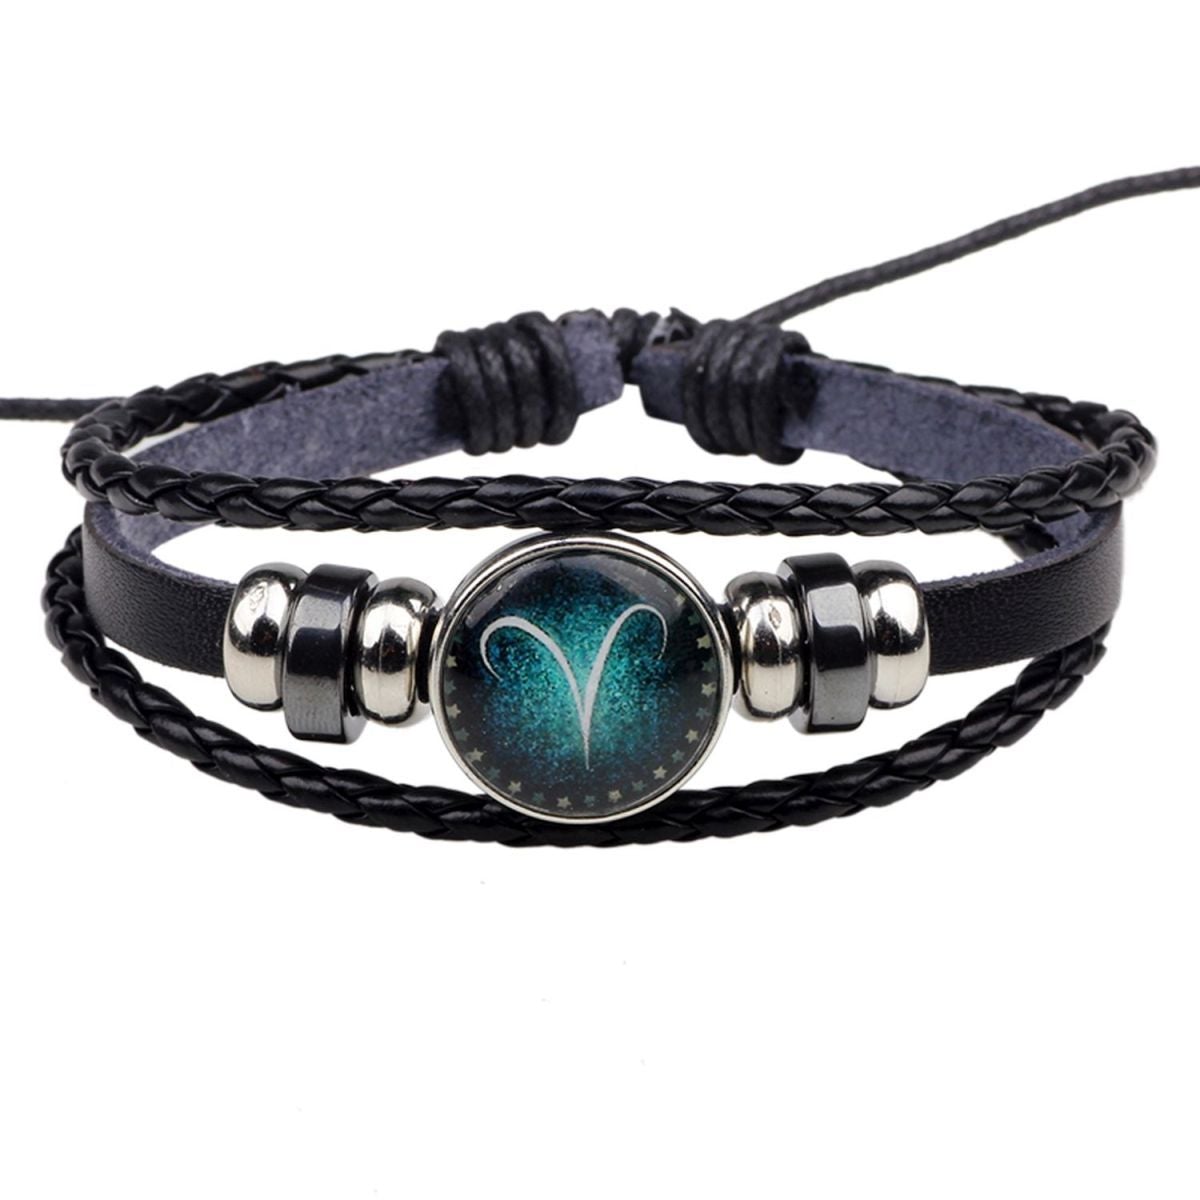 Aries Constellation Zodiac Star Sign Leather Wrist Band Bracelet